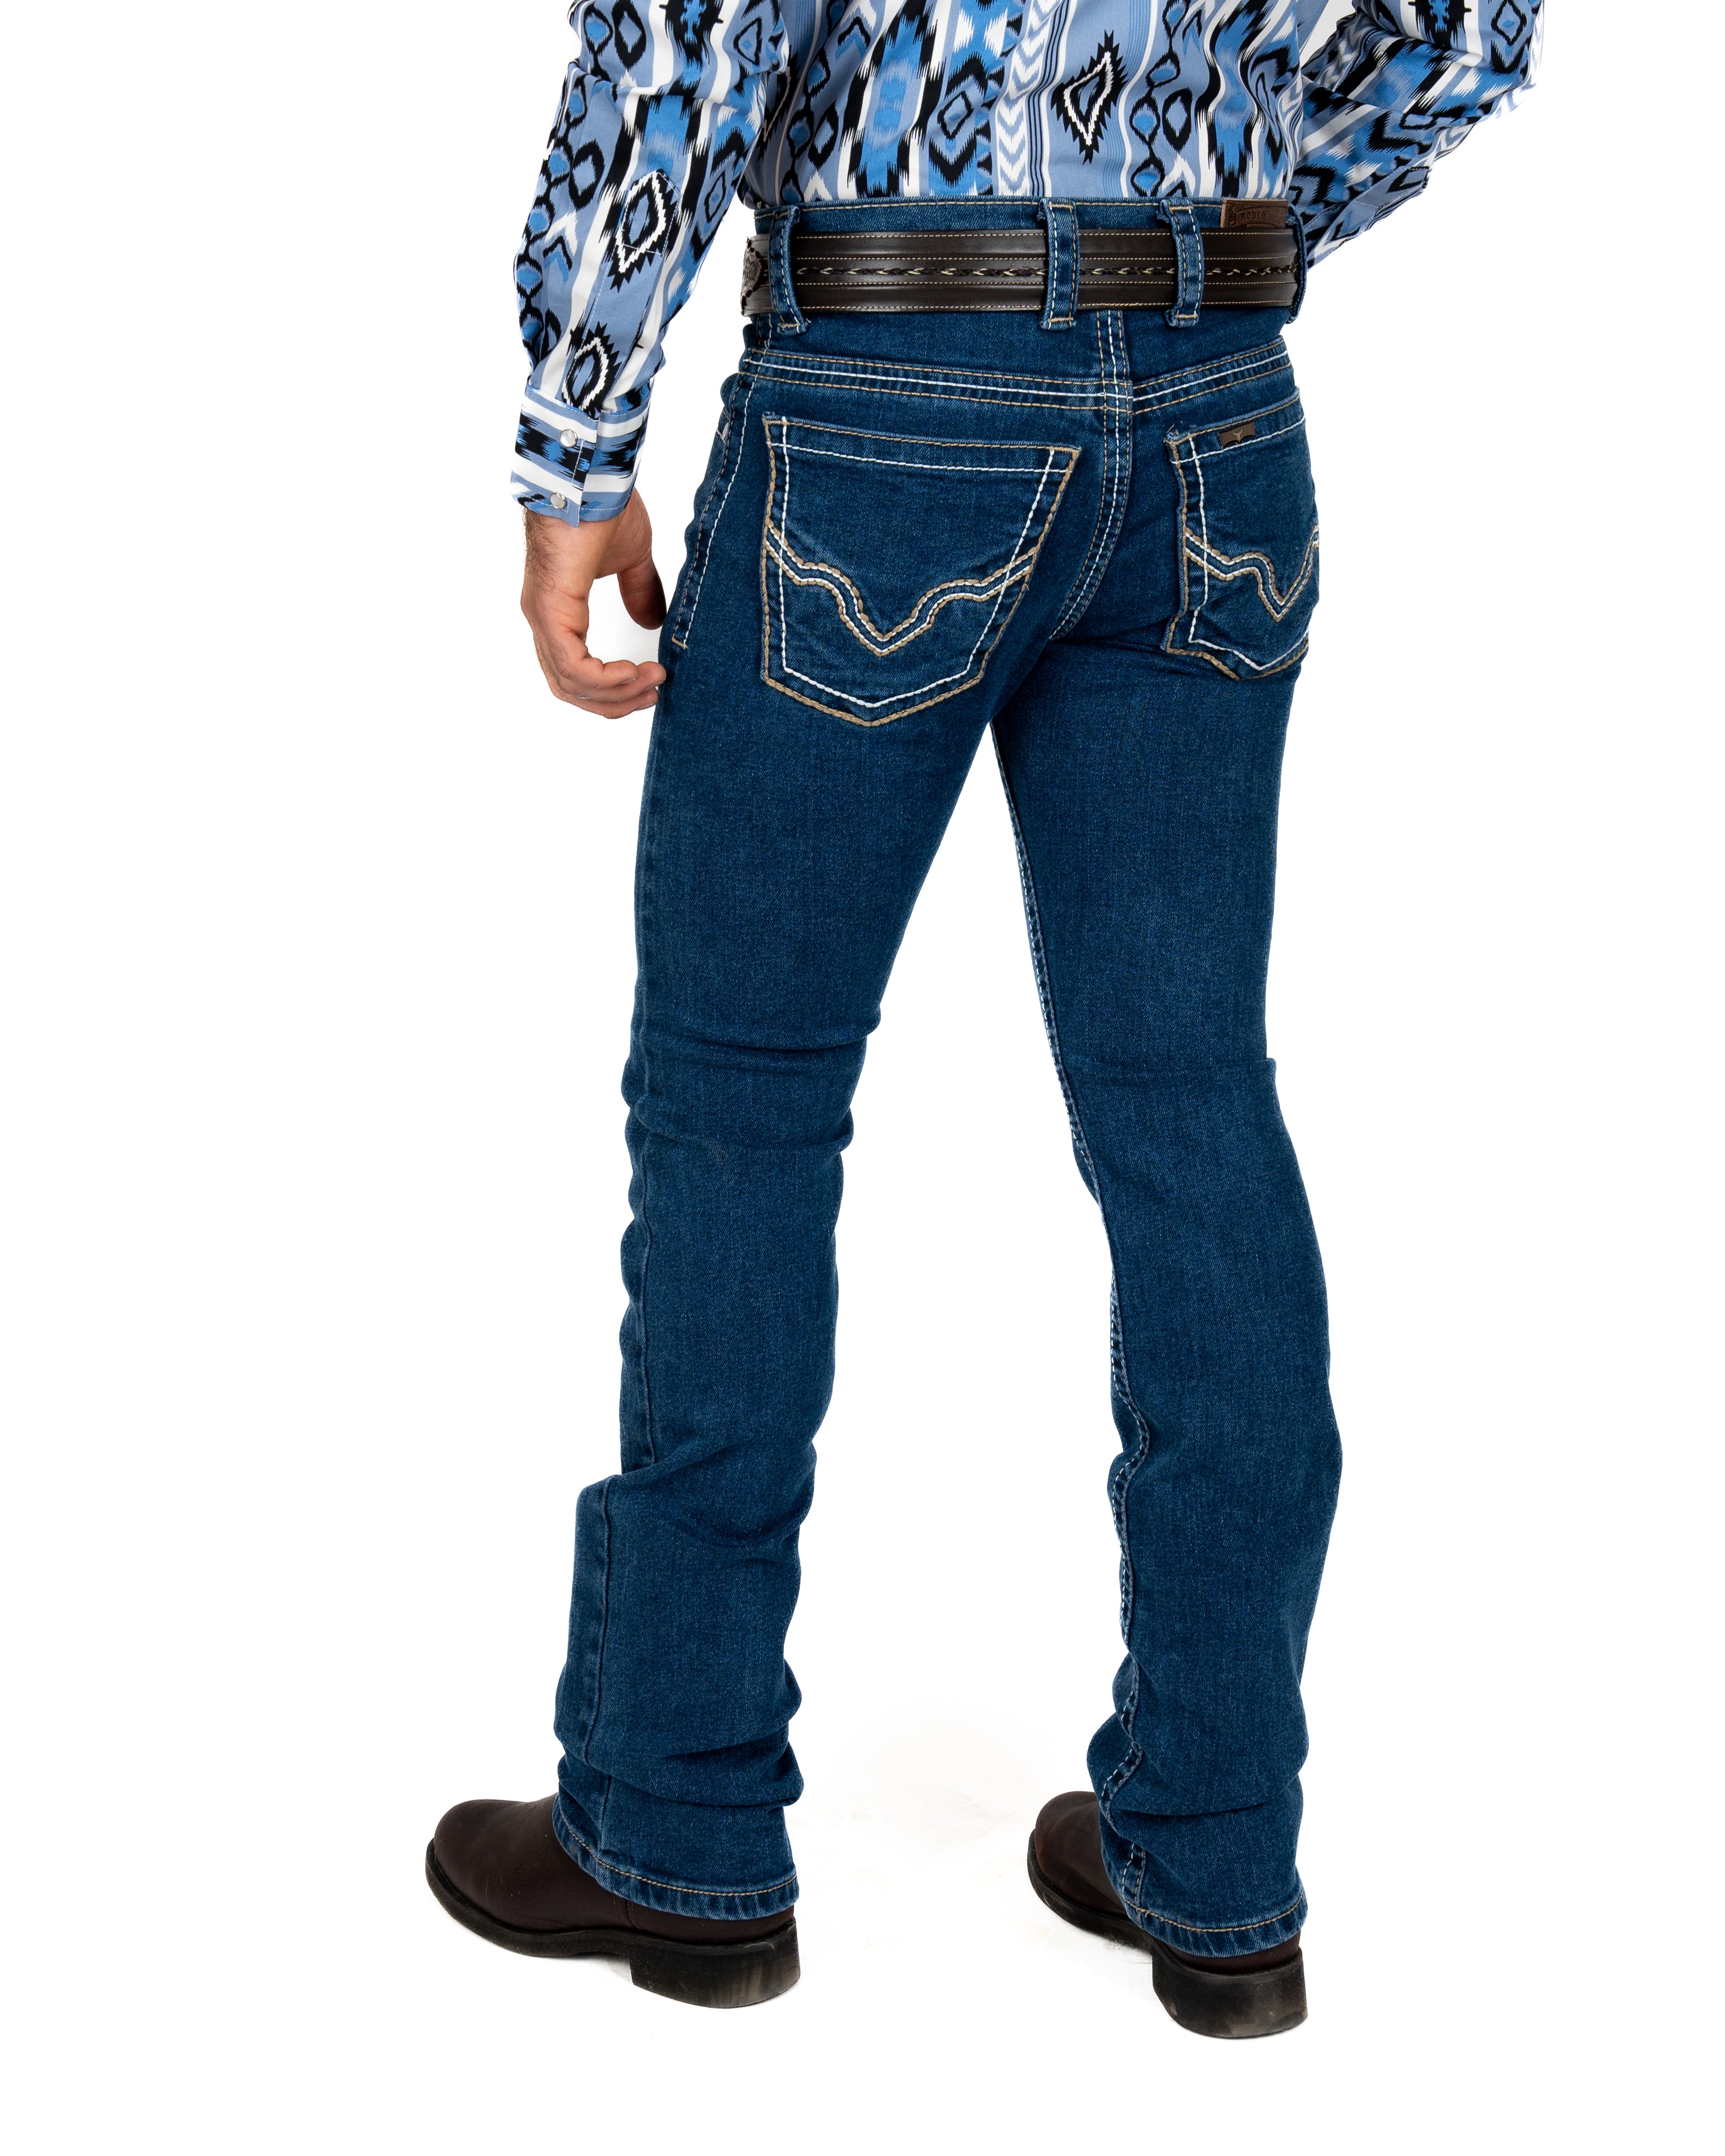 Jeans Rodeo West CS 409 Caballero